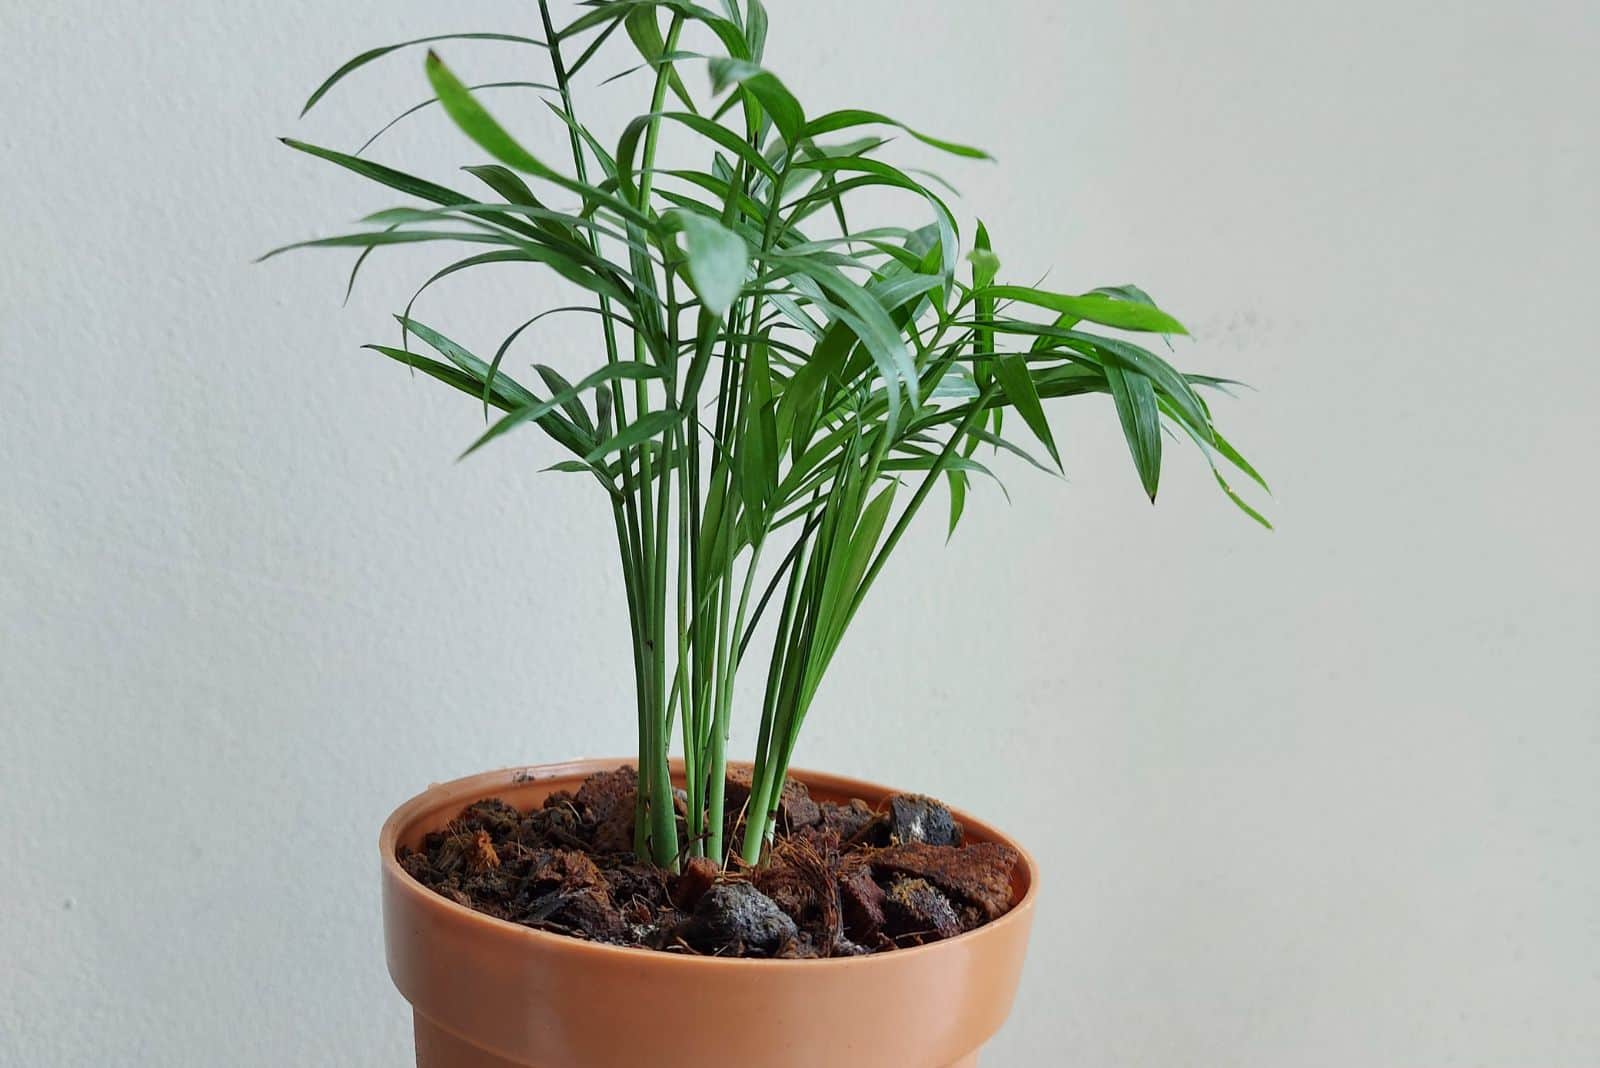 Dwarf Bamboo Palm in a brown pot